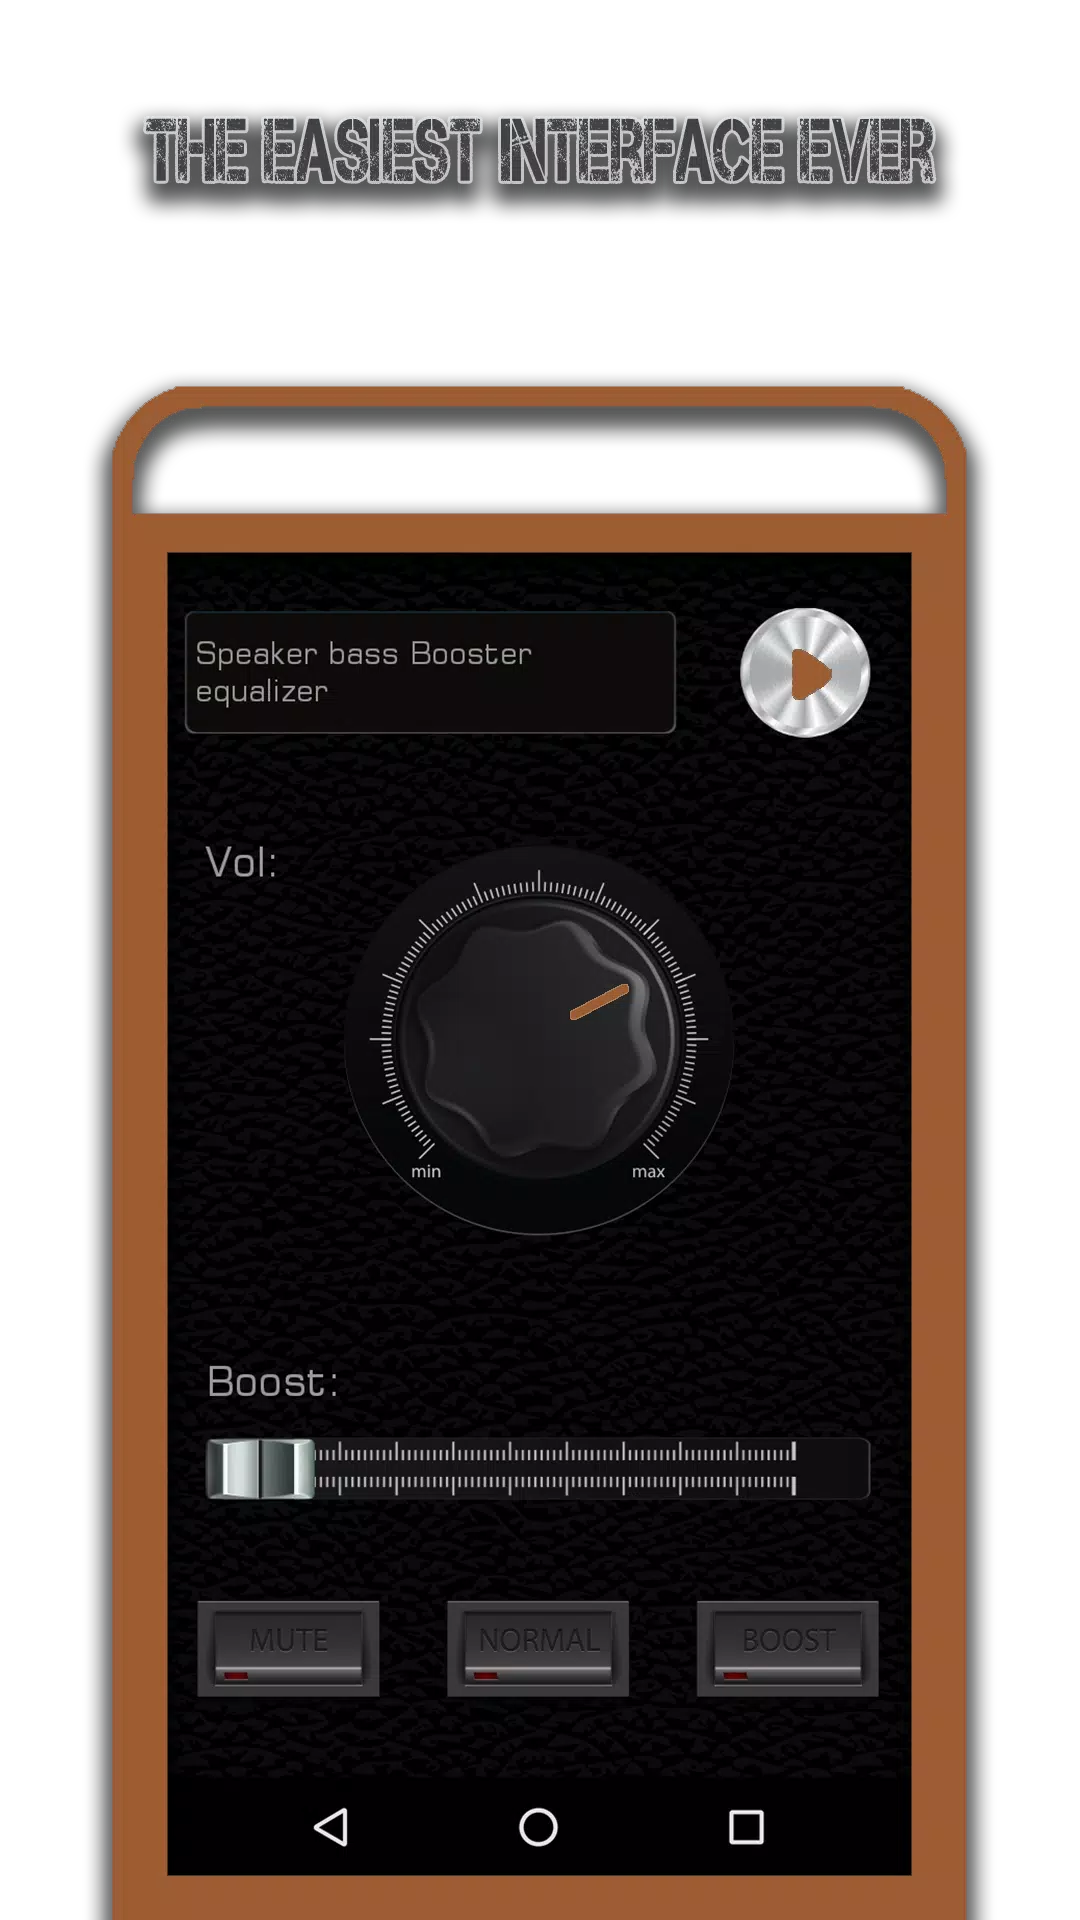 Super Subwoofer Bass Booster Equalizer Pro for Android - APK Download